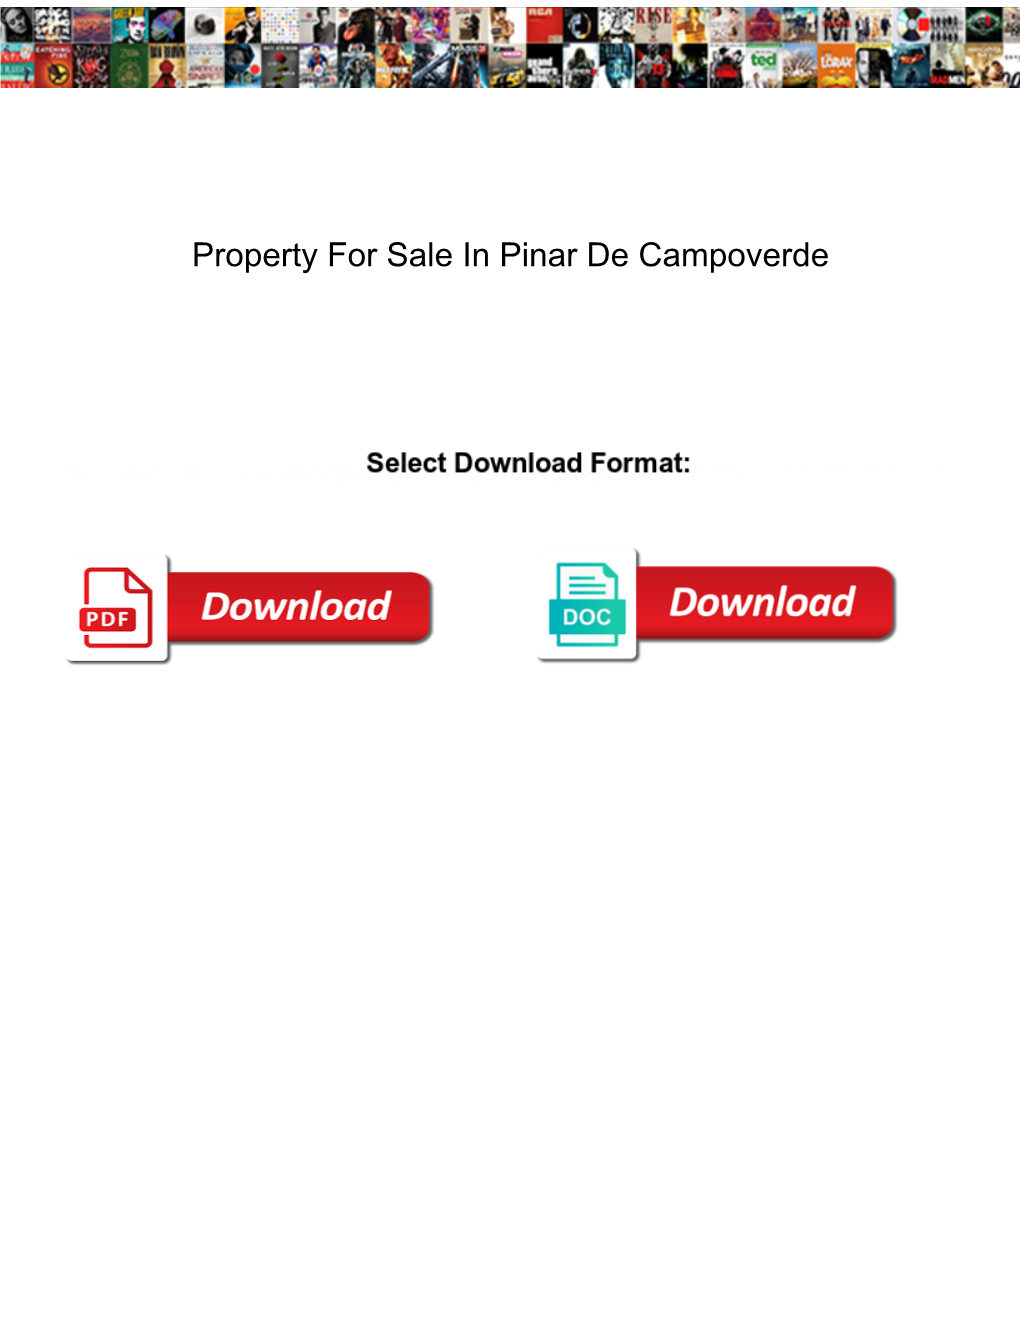 Property for Sale in Pinar De Campoverde